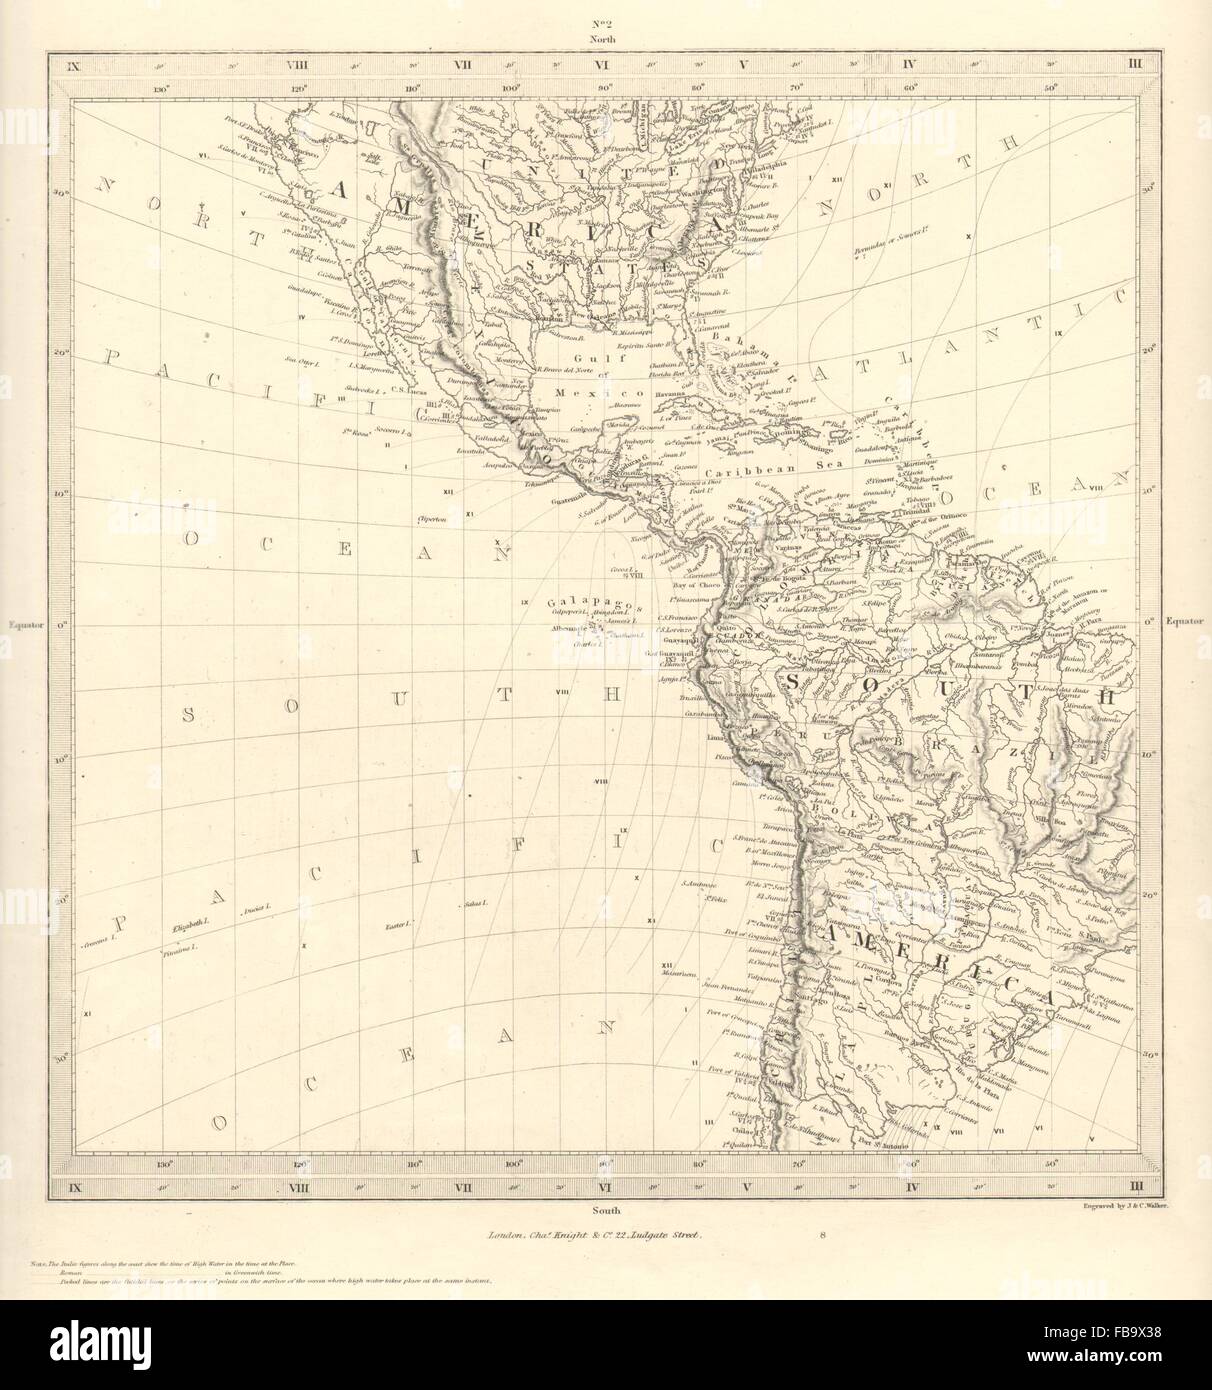 AMERICAS. Gnomonic Projection. Shows Texas as part of Mexico. SDUK, 1844 map Stock Photo